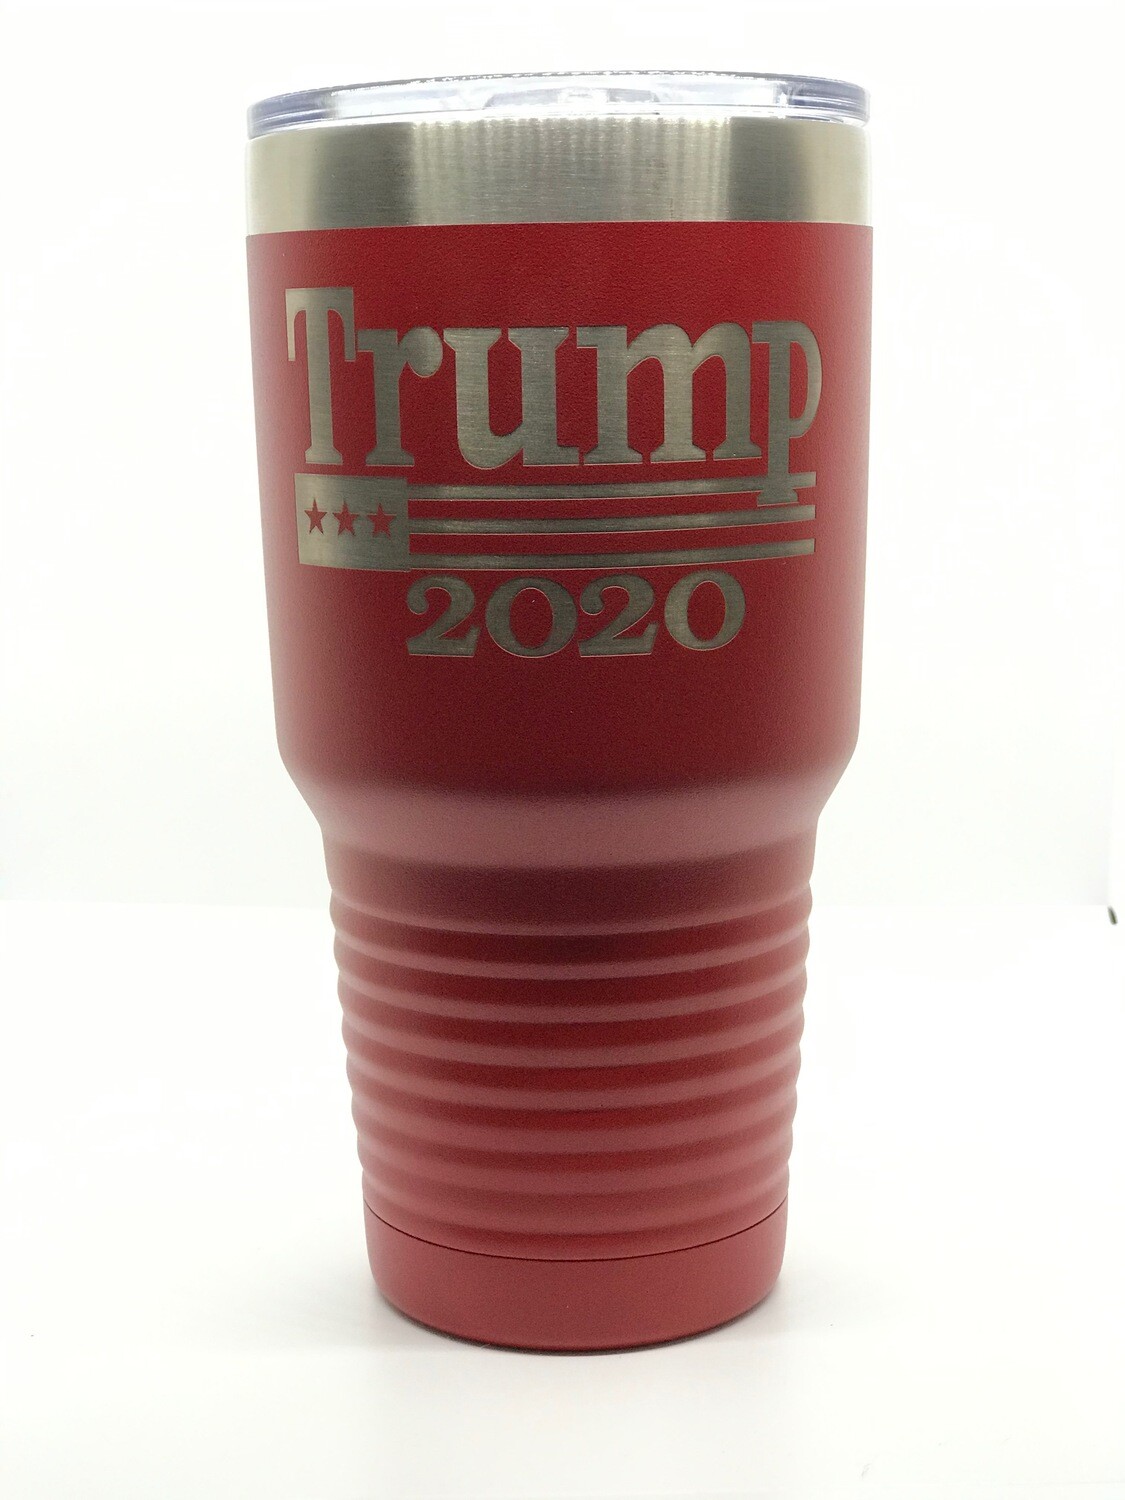 Trump 2020 
30 oz. Ringneck Tumbler